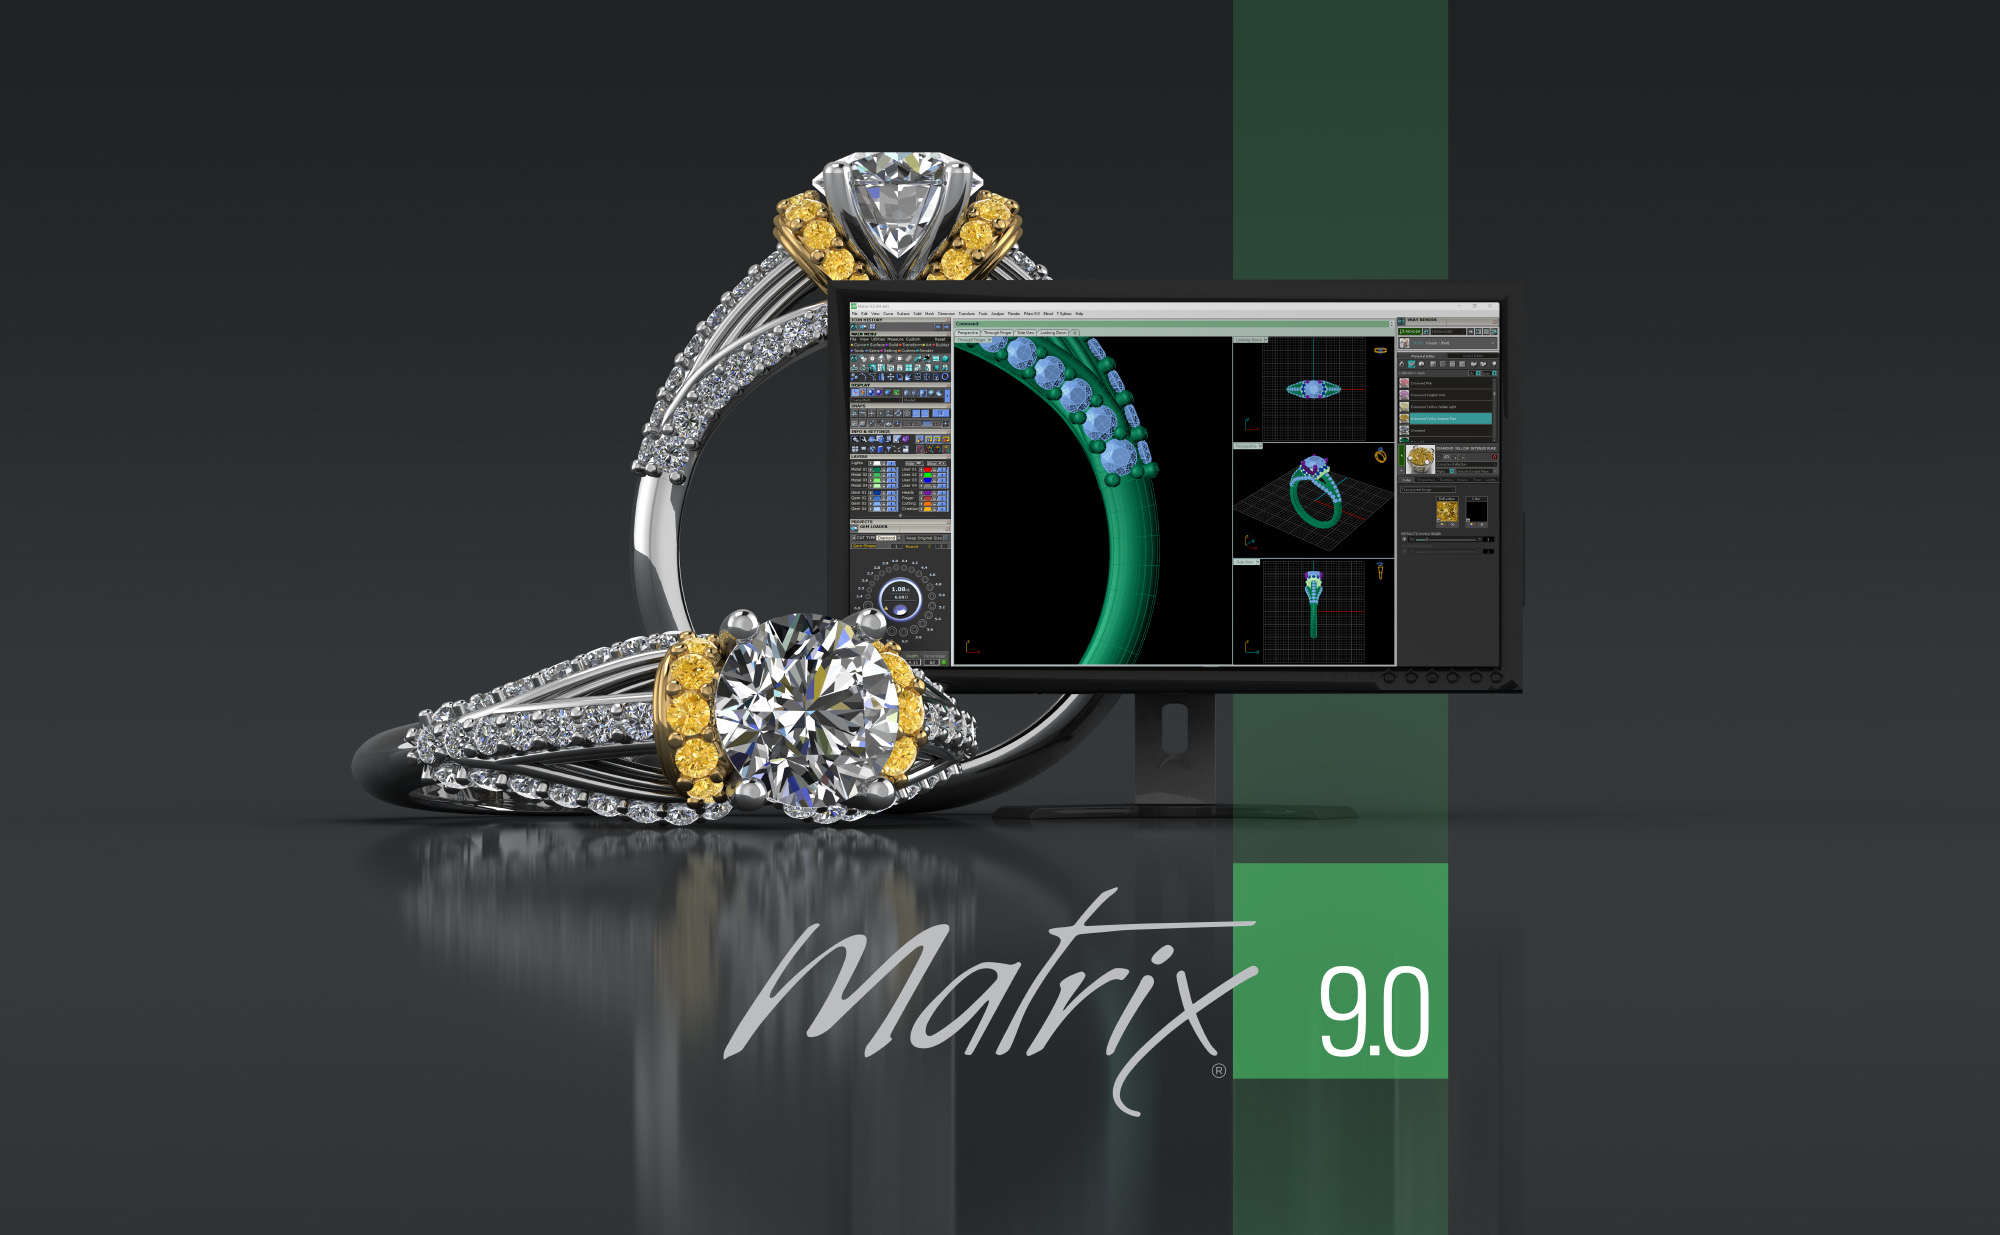 matrix jewellery design software free download